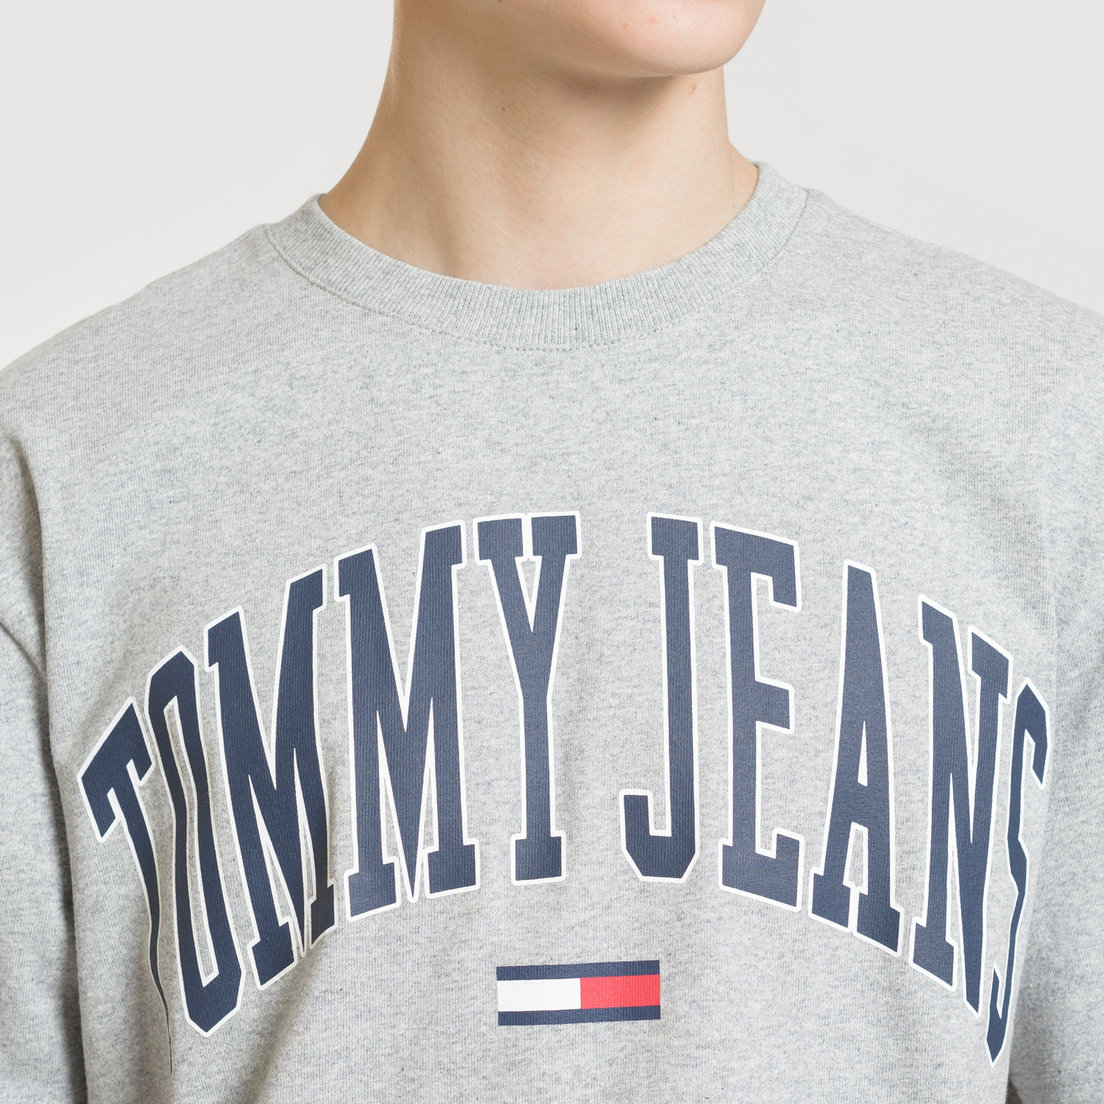 Tommy Jeans Мужская футболка Collegiate